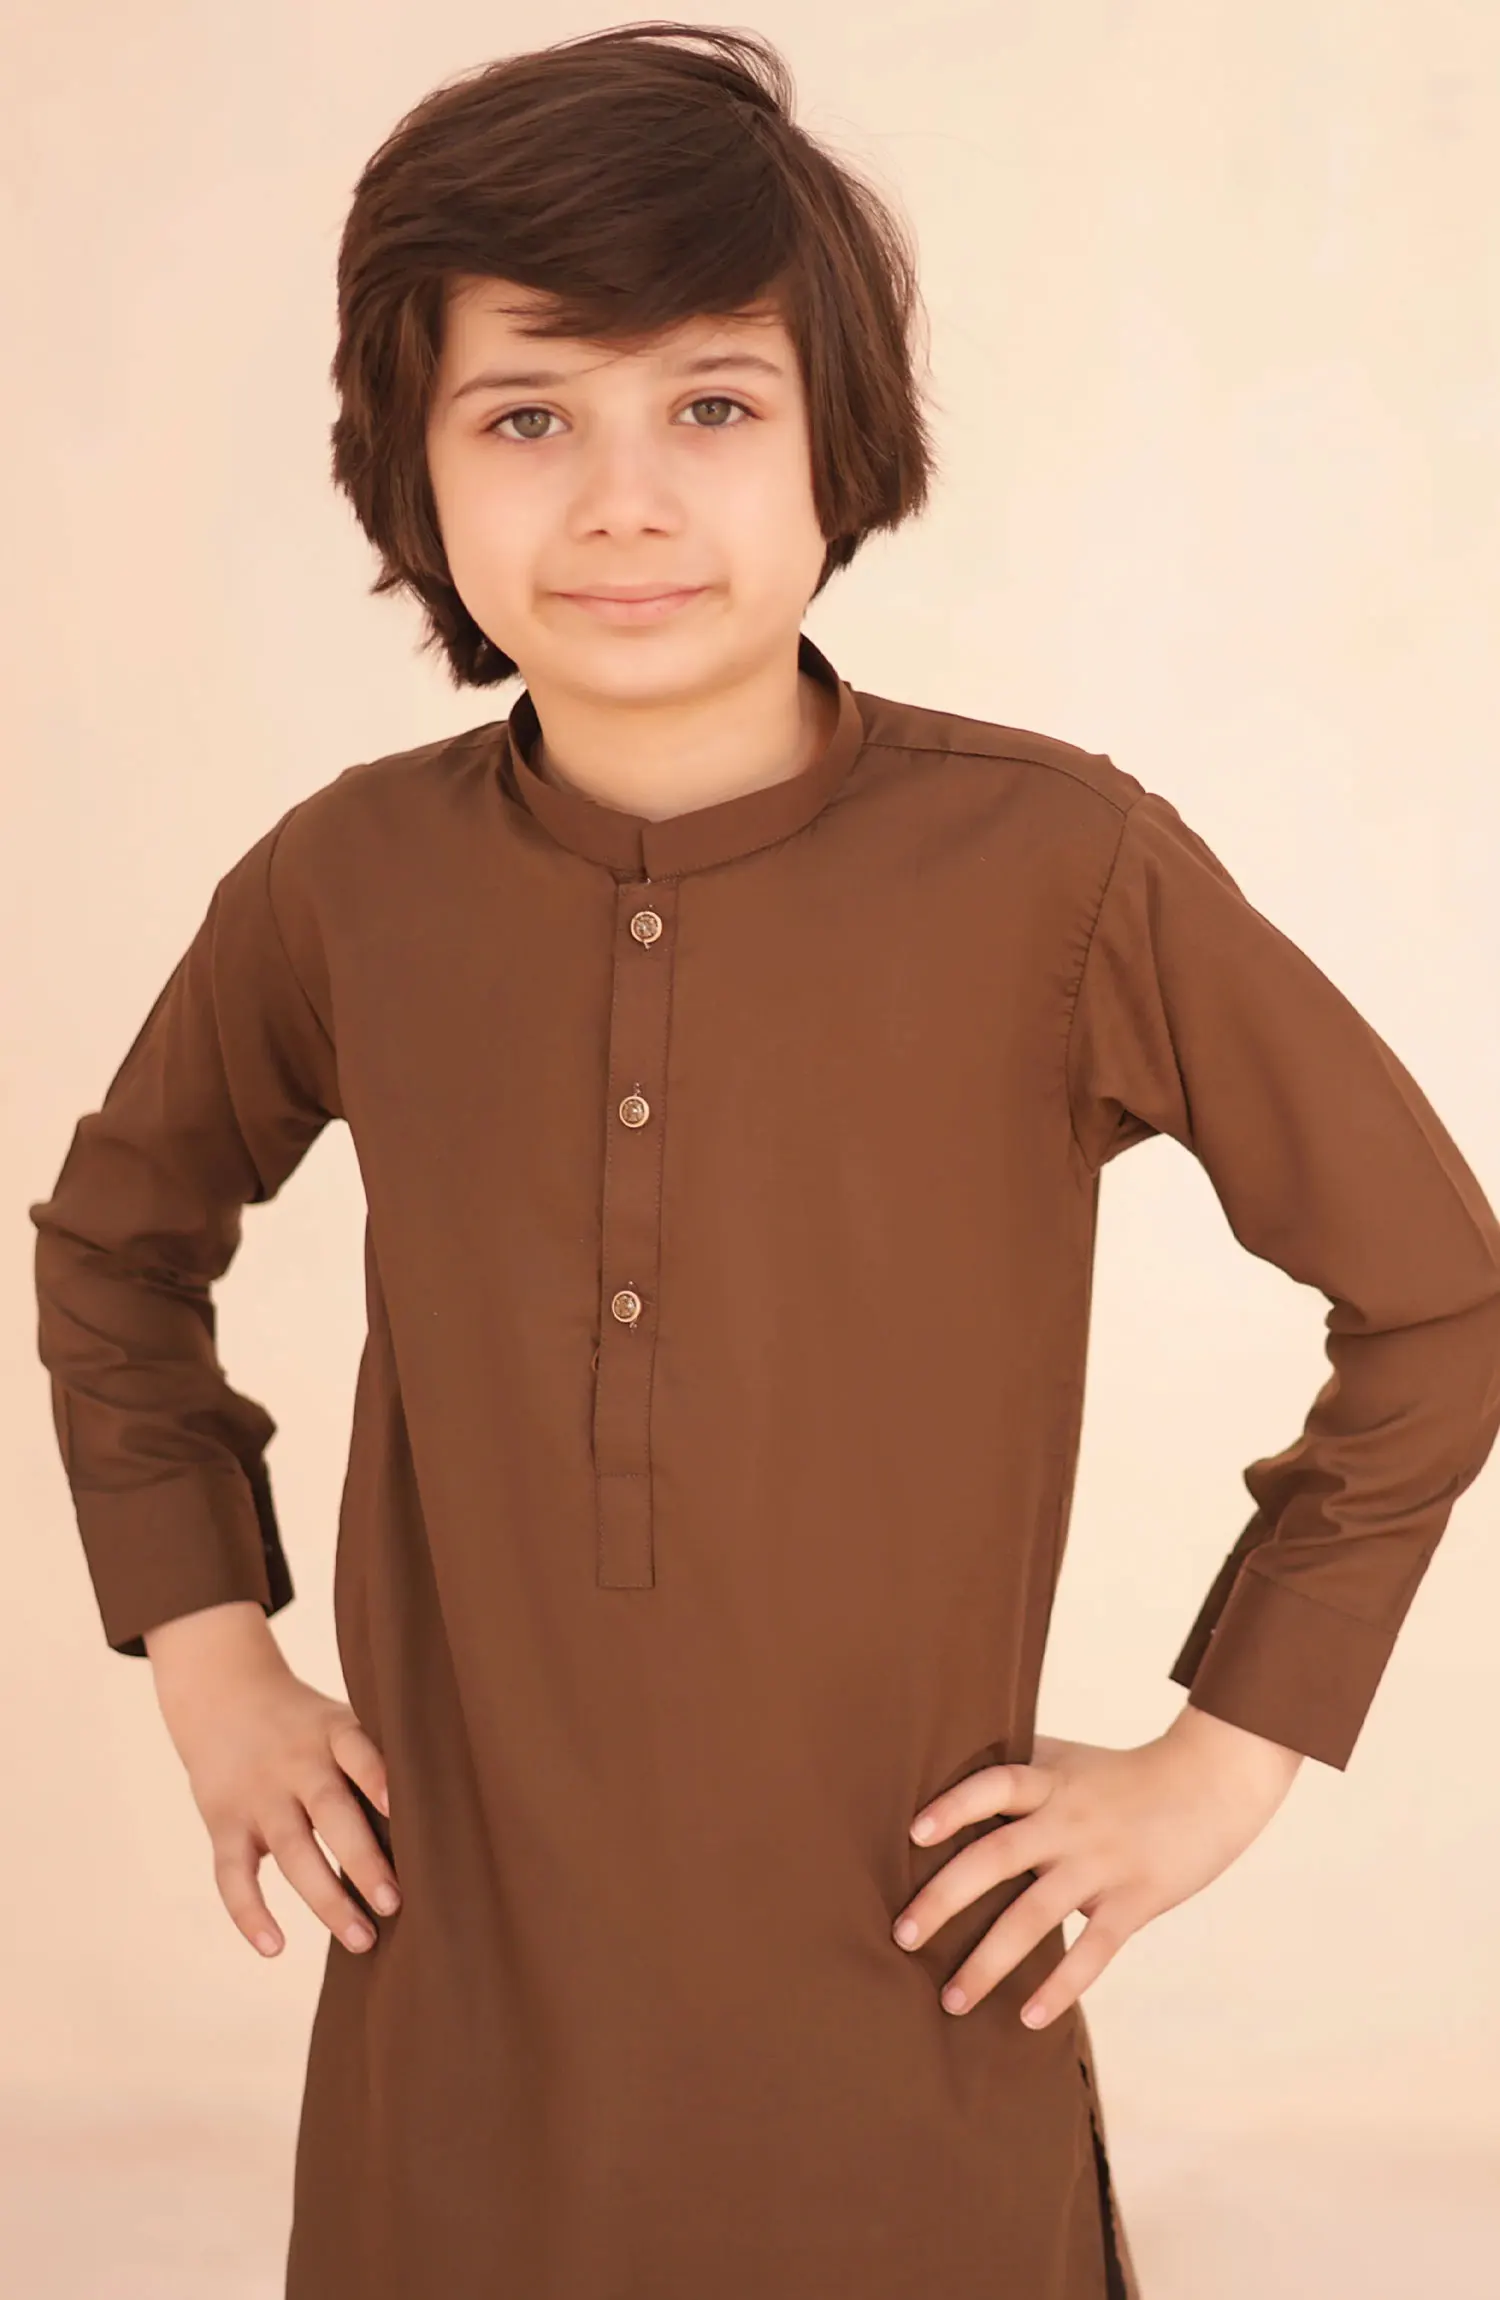 Ramazan Edit Kurta Trouser Collection By Hassan Jee - KT 28 Coffee Brown Kurta Trouser